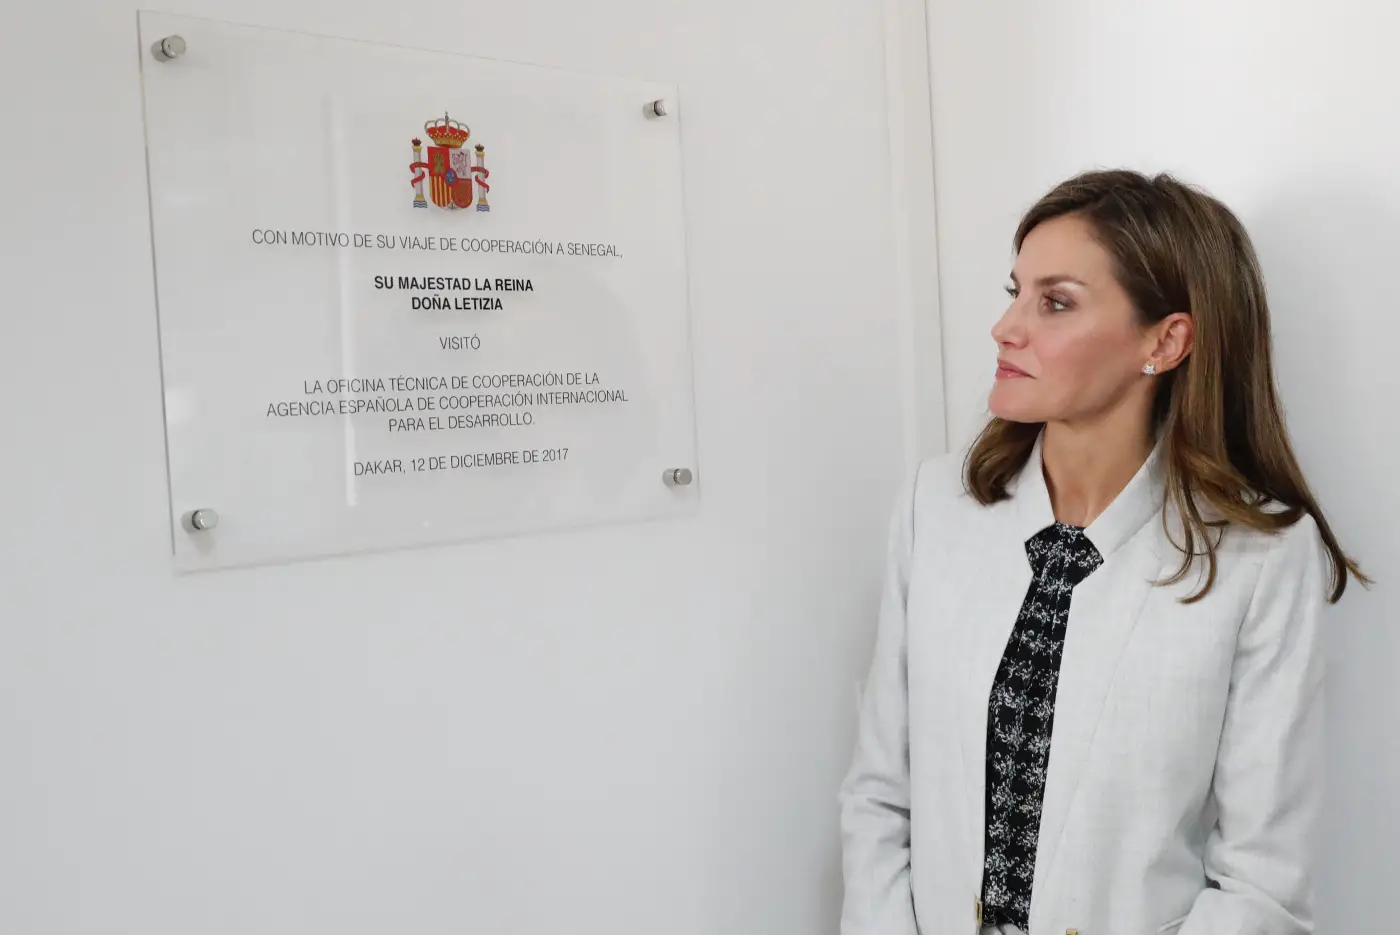 Queen Letizia’s Day 1 of Cooperation visit to Senegal